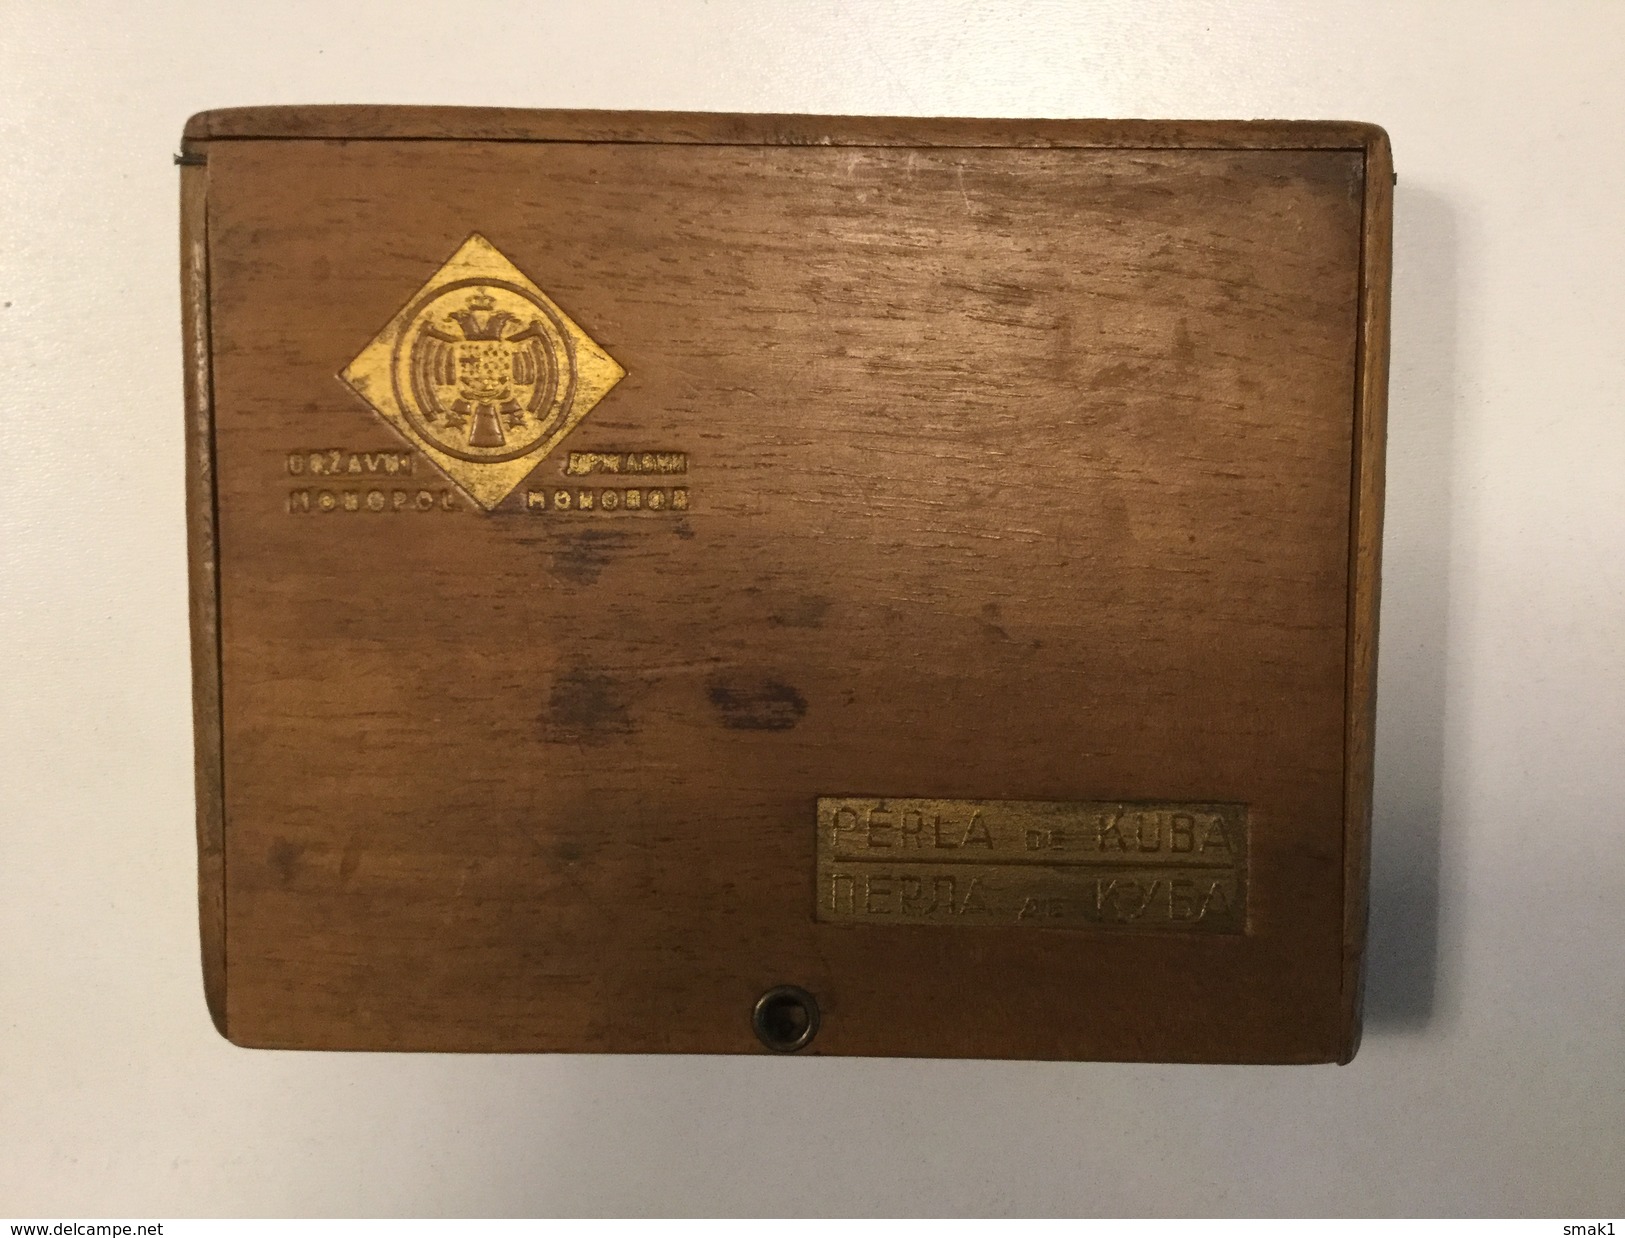 EMPTY CIGARE  BOX    MADE OF  WOOD   PERLA DE KUBA     DRZAVNI MONOPOL   YUGOSLAVIA - Cigar Cases